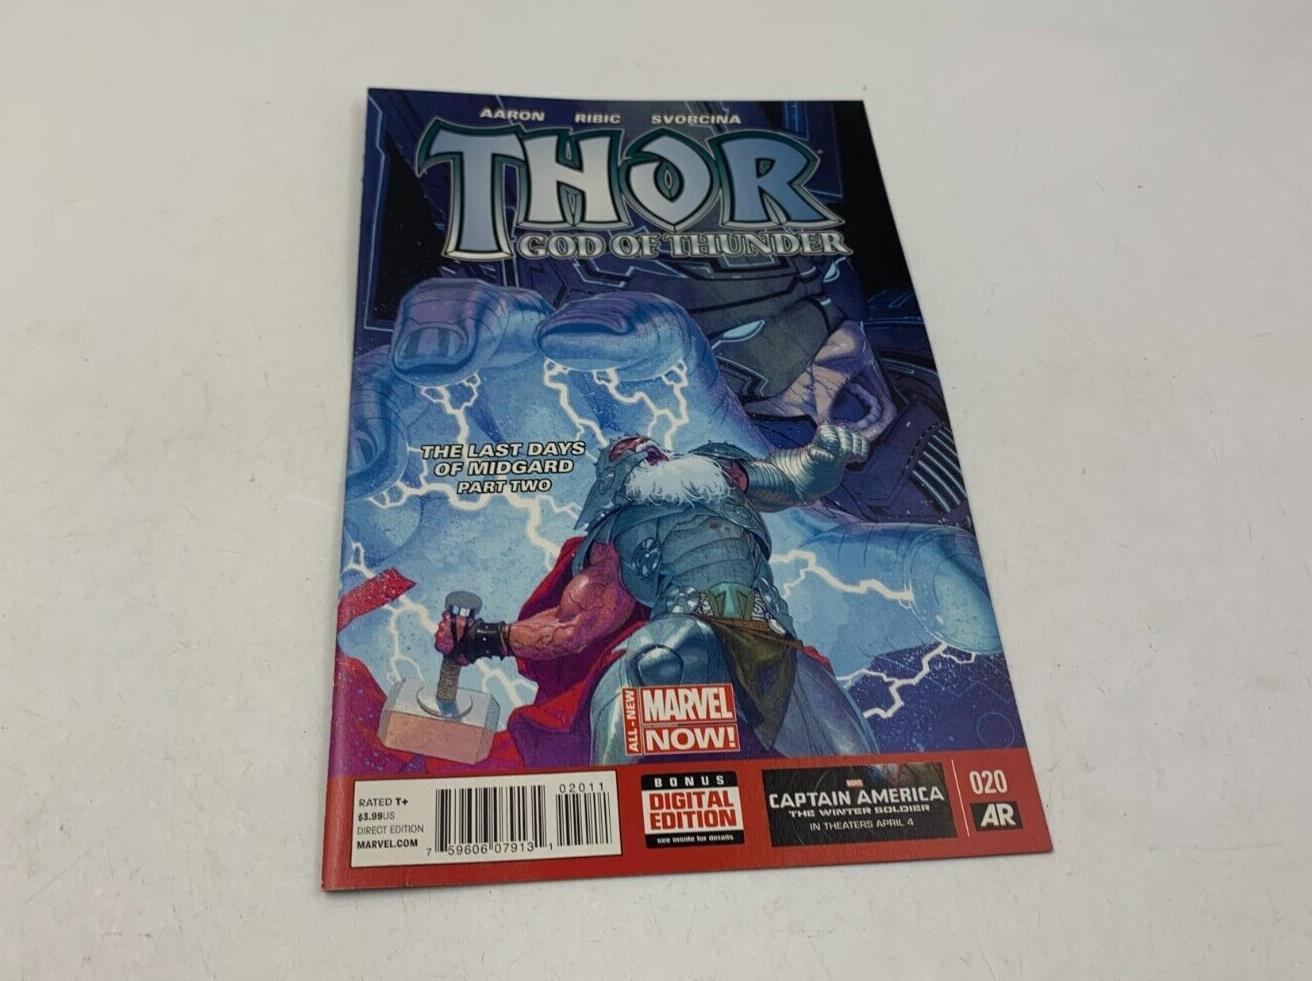 Thor: God of Thunder #20 1st app of Dario Agger as Minotaur Aaron Marvel 2013